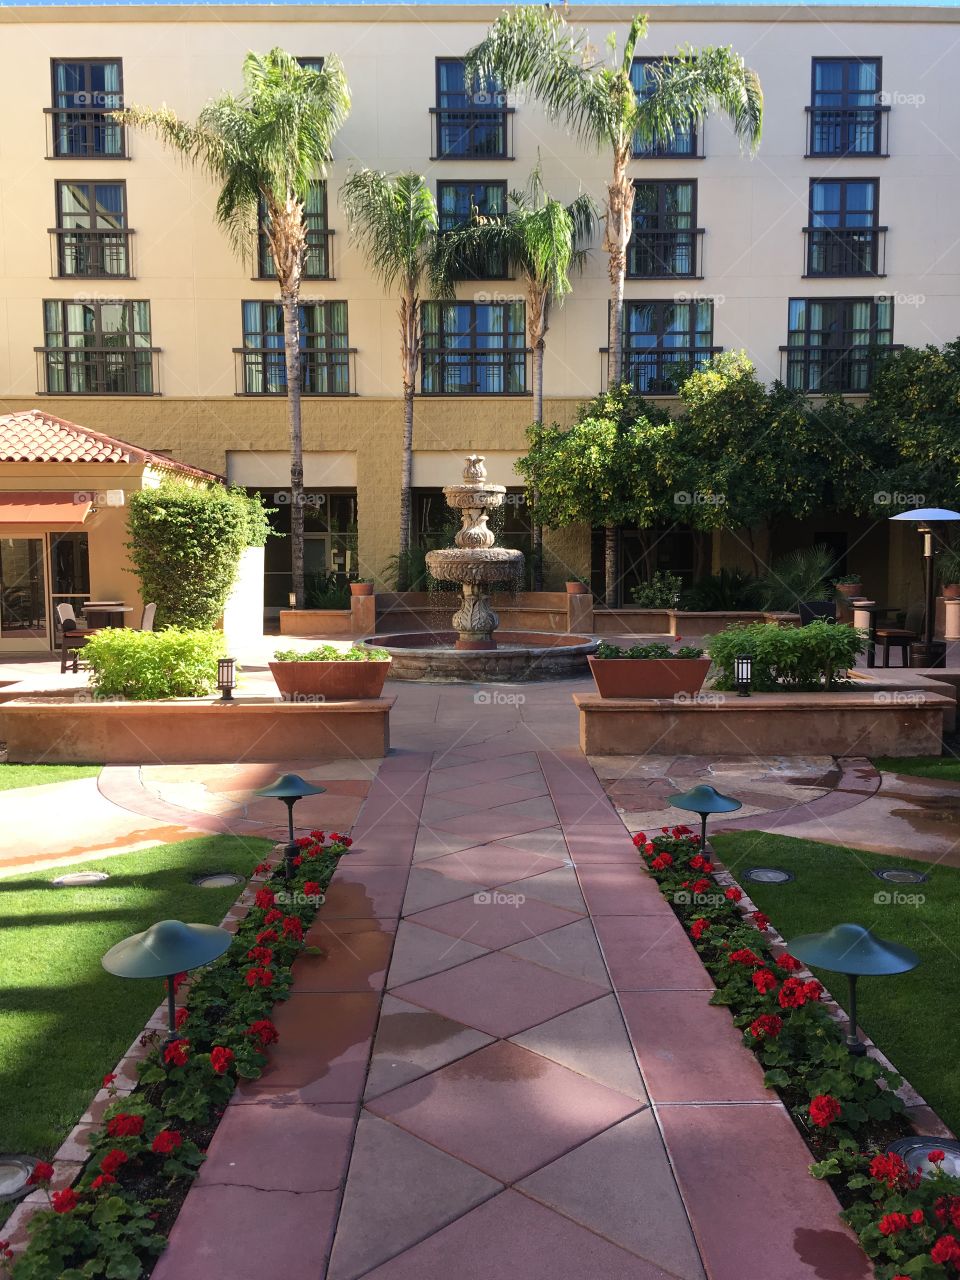 Mission palms resort courtyard